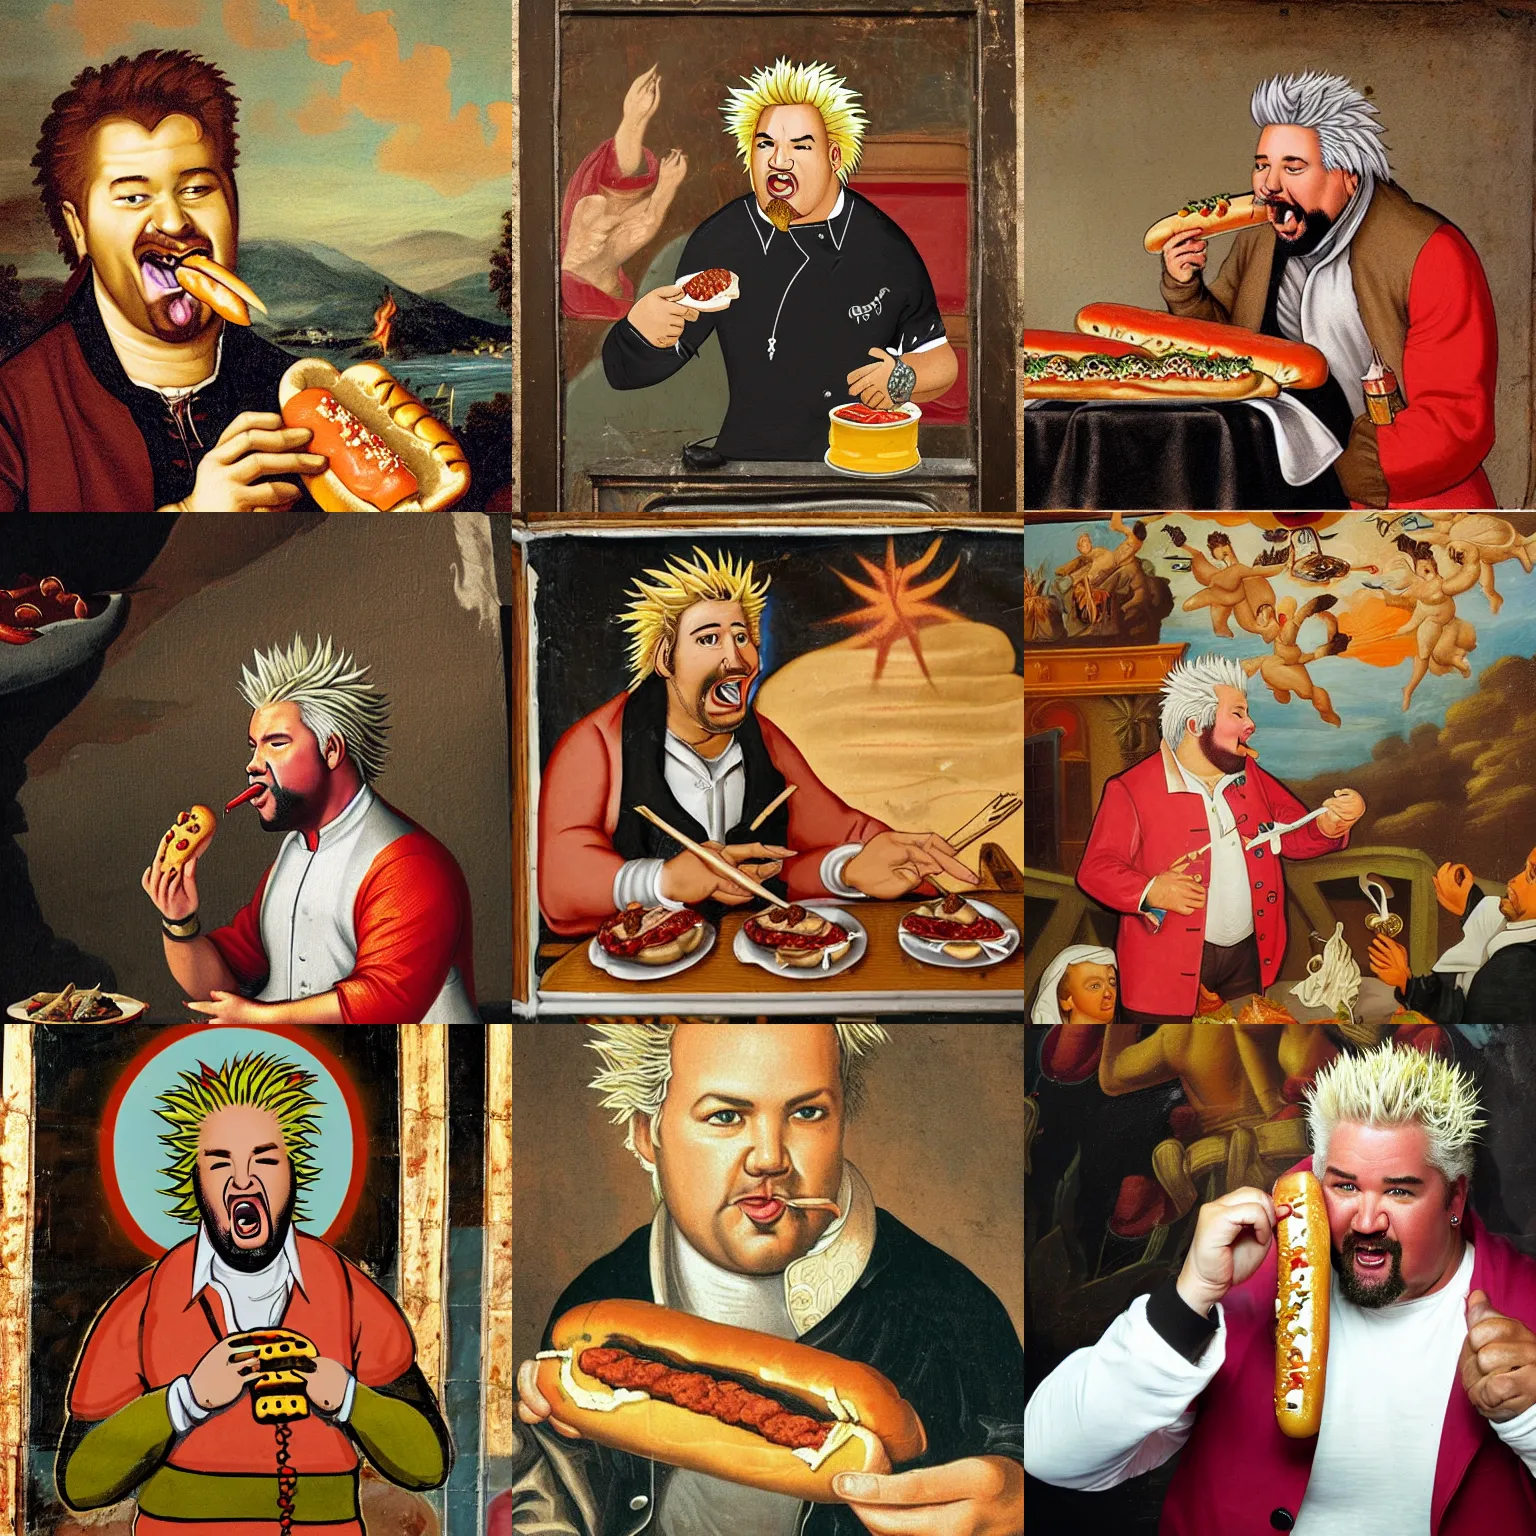 Prompt: Guy Fieri eating a hotdog, 1700s religious mural, art